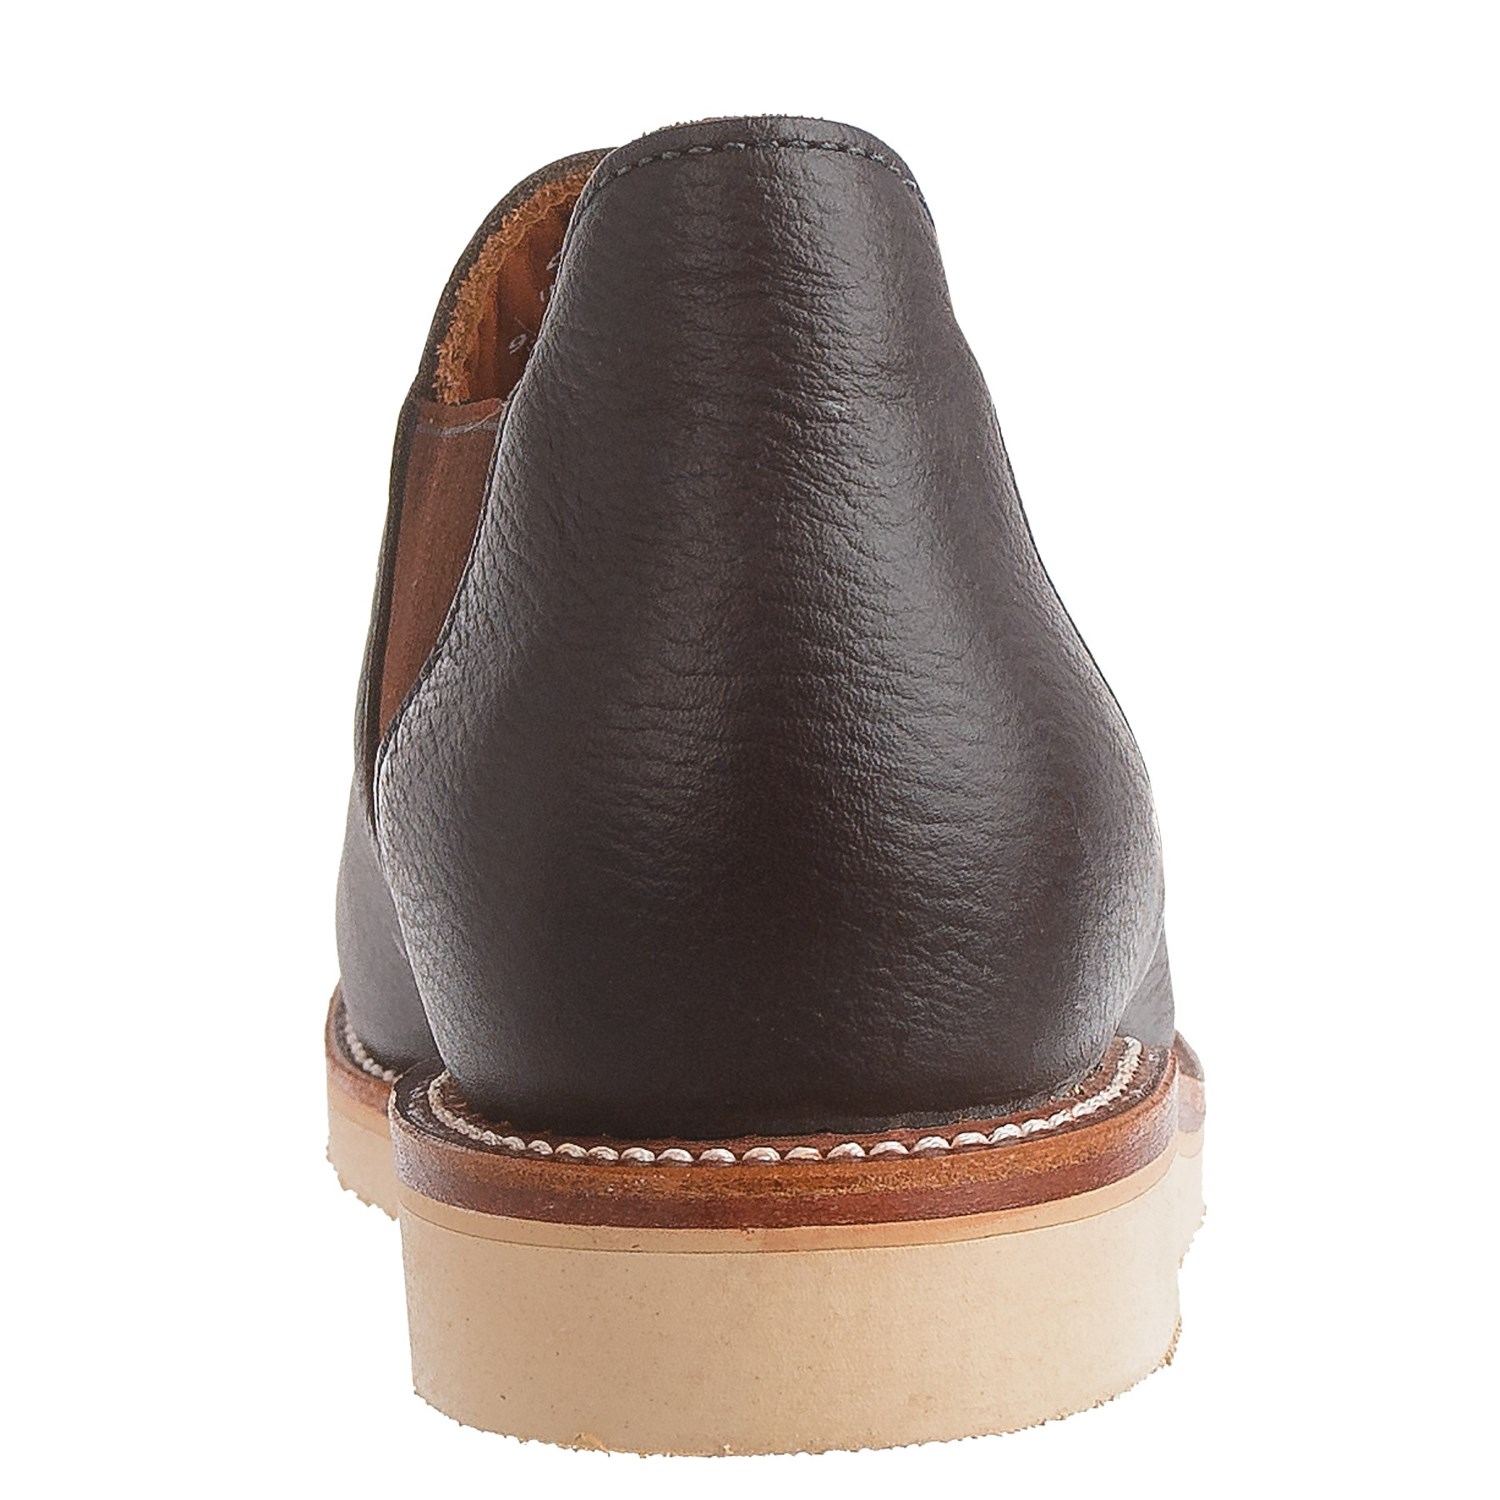 Chippewa 1967 Original Romeo Shoes (For Men) - Save 58%